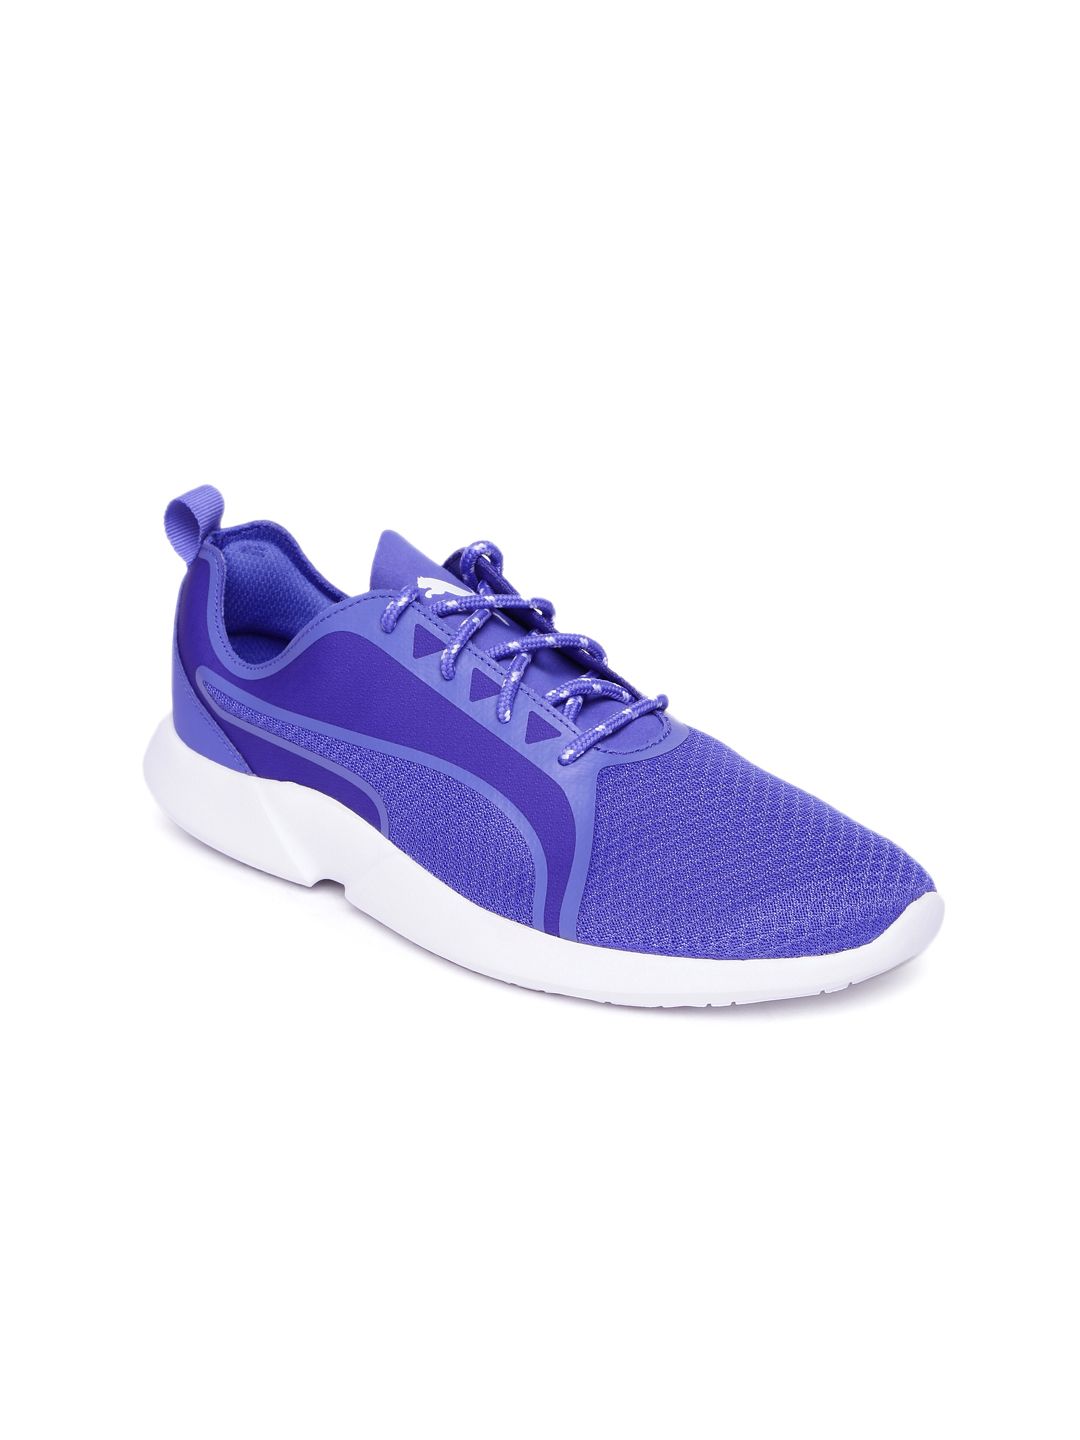 Puma Karlie Dp Purple Sporty Sneakers for women - Get ...